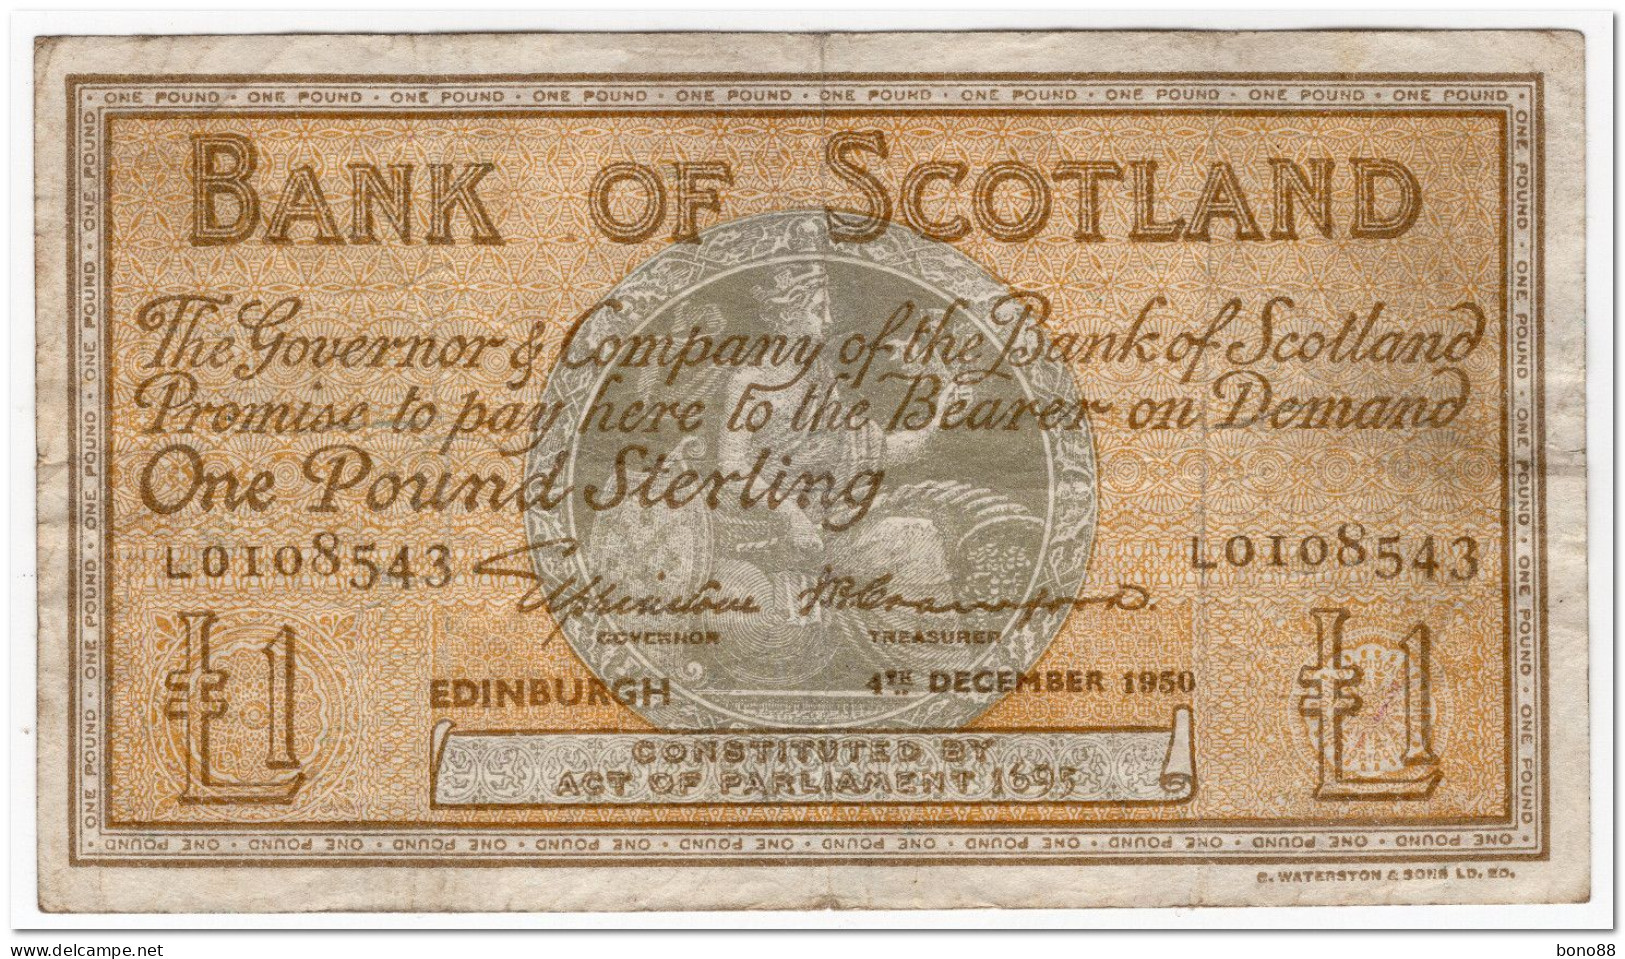 SCOTLAND,BANK OF SCOTLAND,1 POUND,1950,P.96b,FINE - 1 Pond